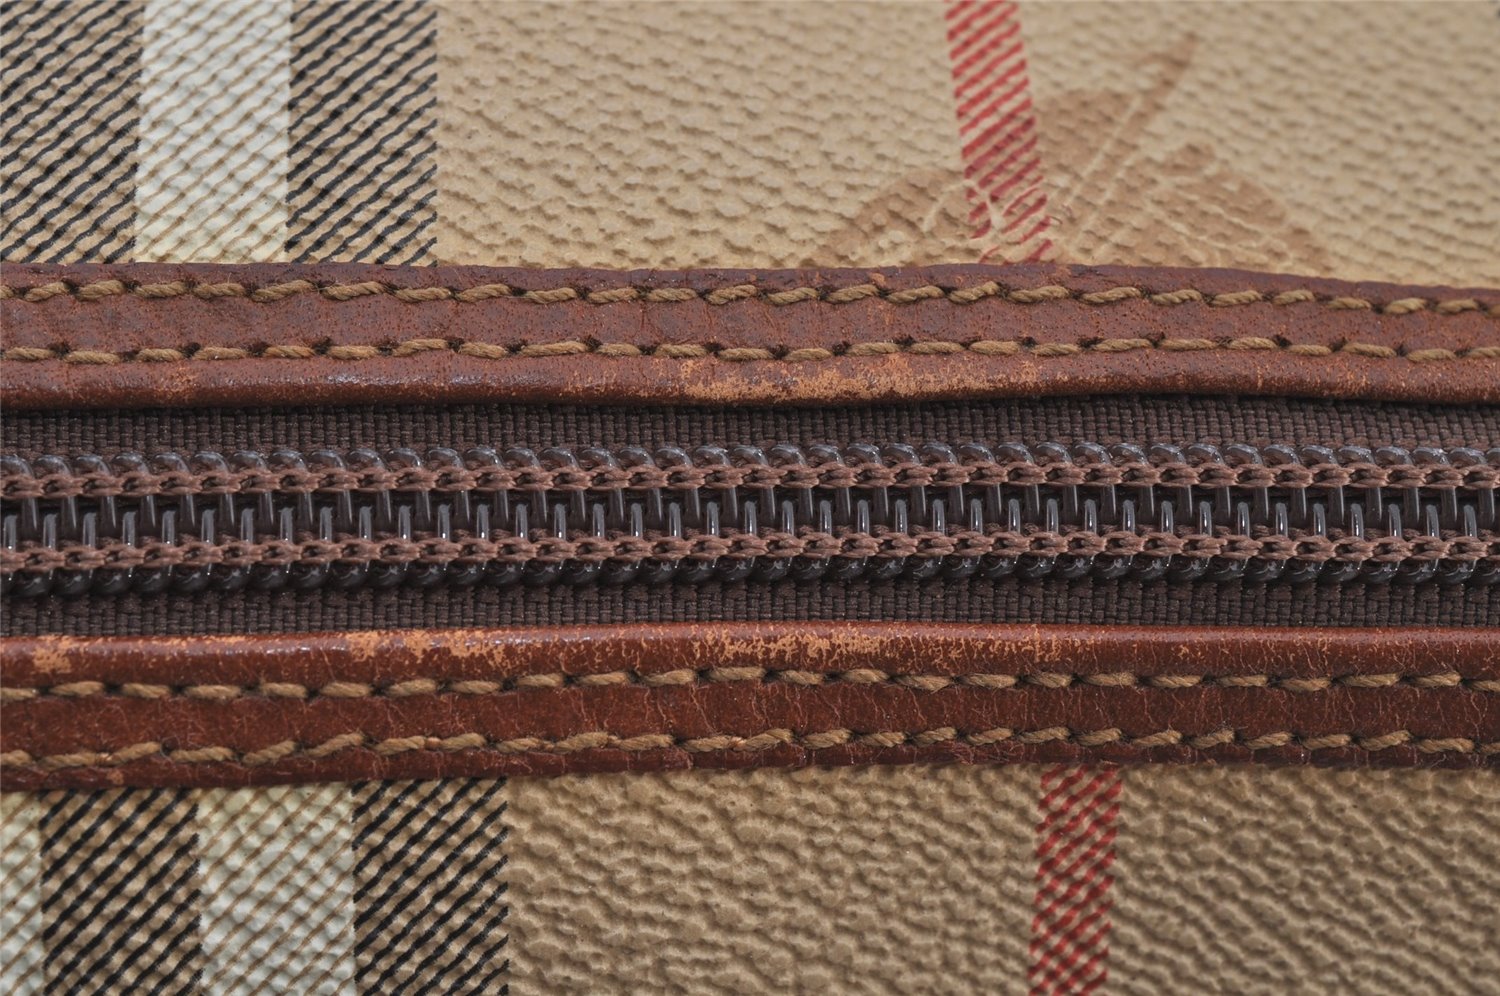 Authentic Burberrys Nova Check PVC Leather Hand Boston Bag Brown Beige 6945J